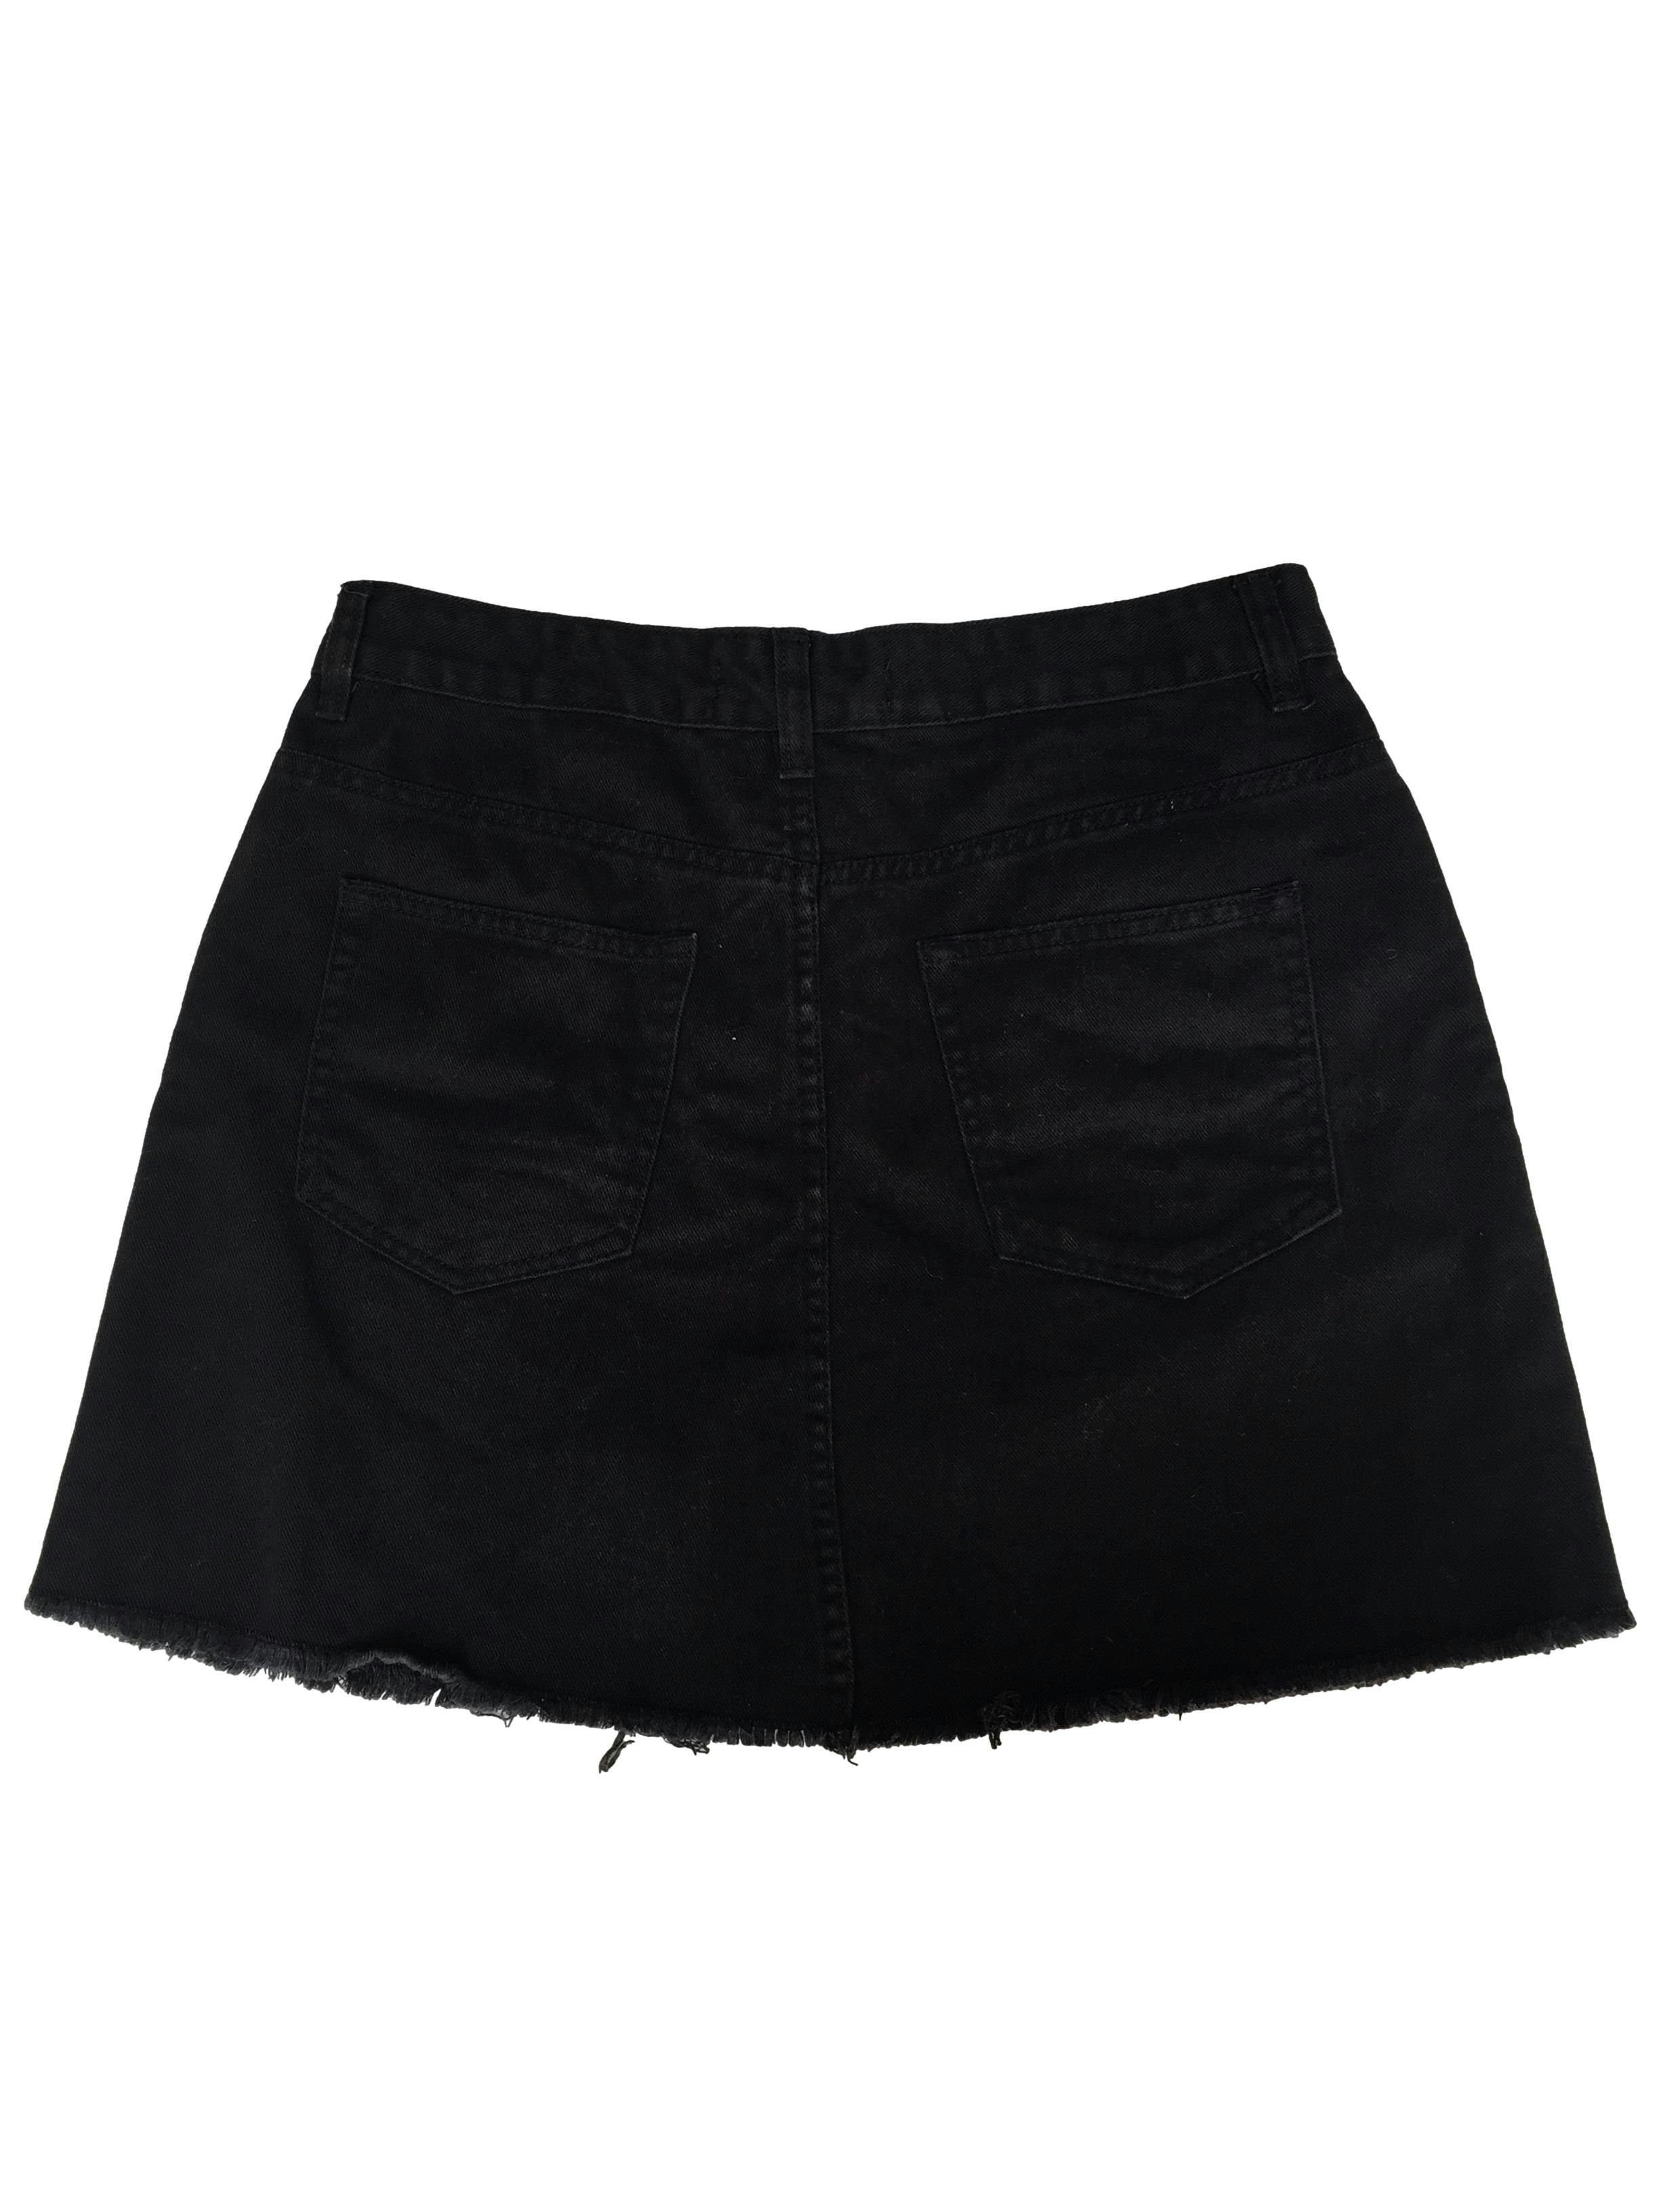 Falda negra Cherokee, four pockets y basta desflecada. Cintura 84 cm, Largo 42 cm